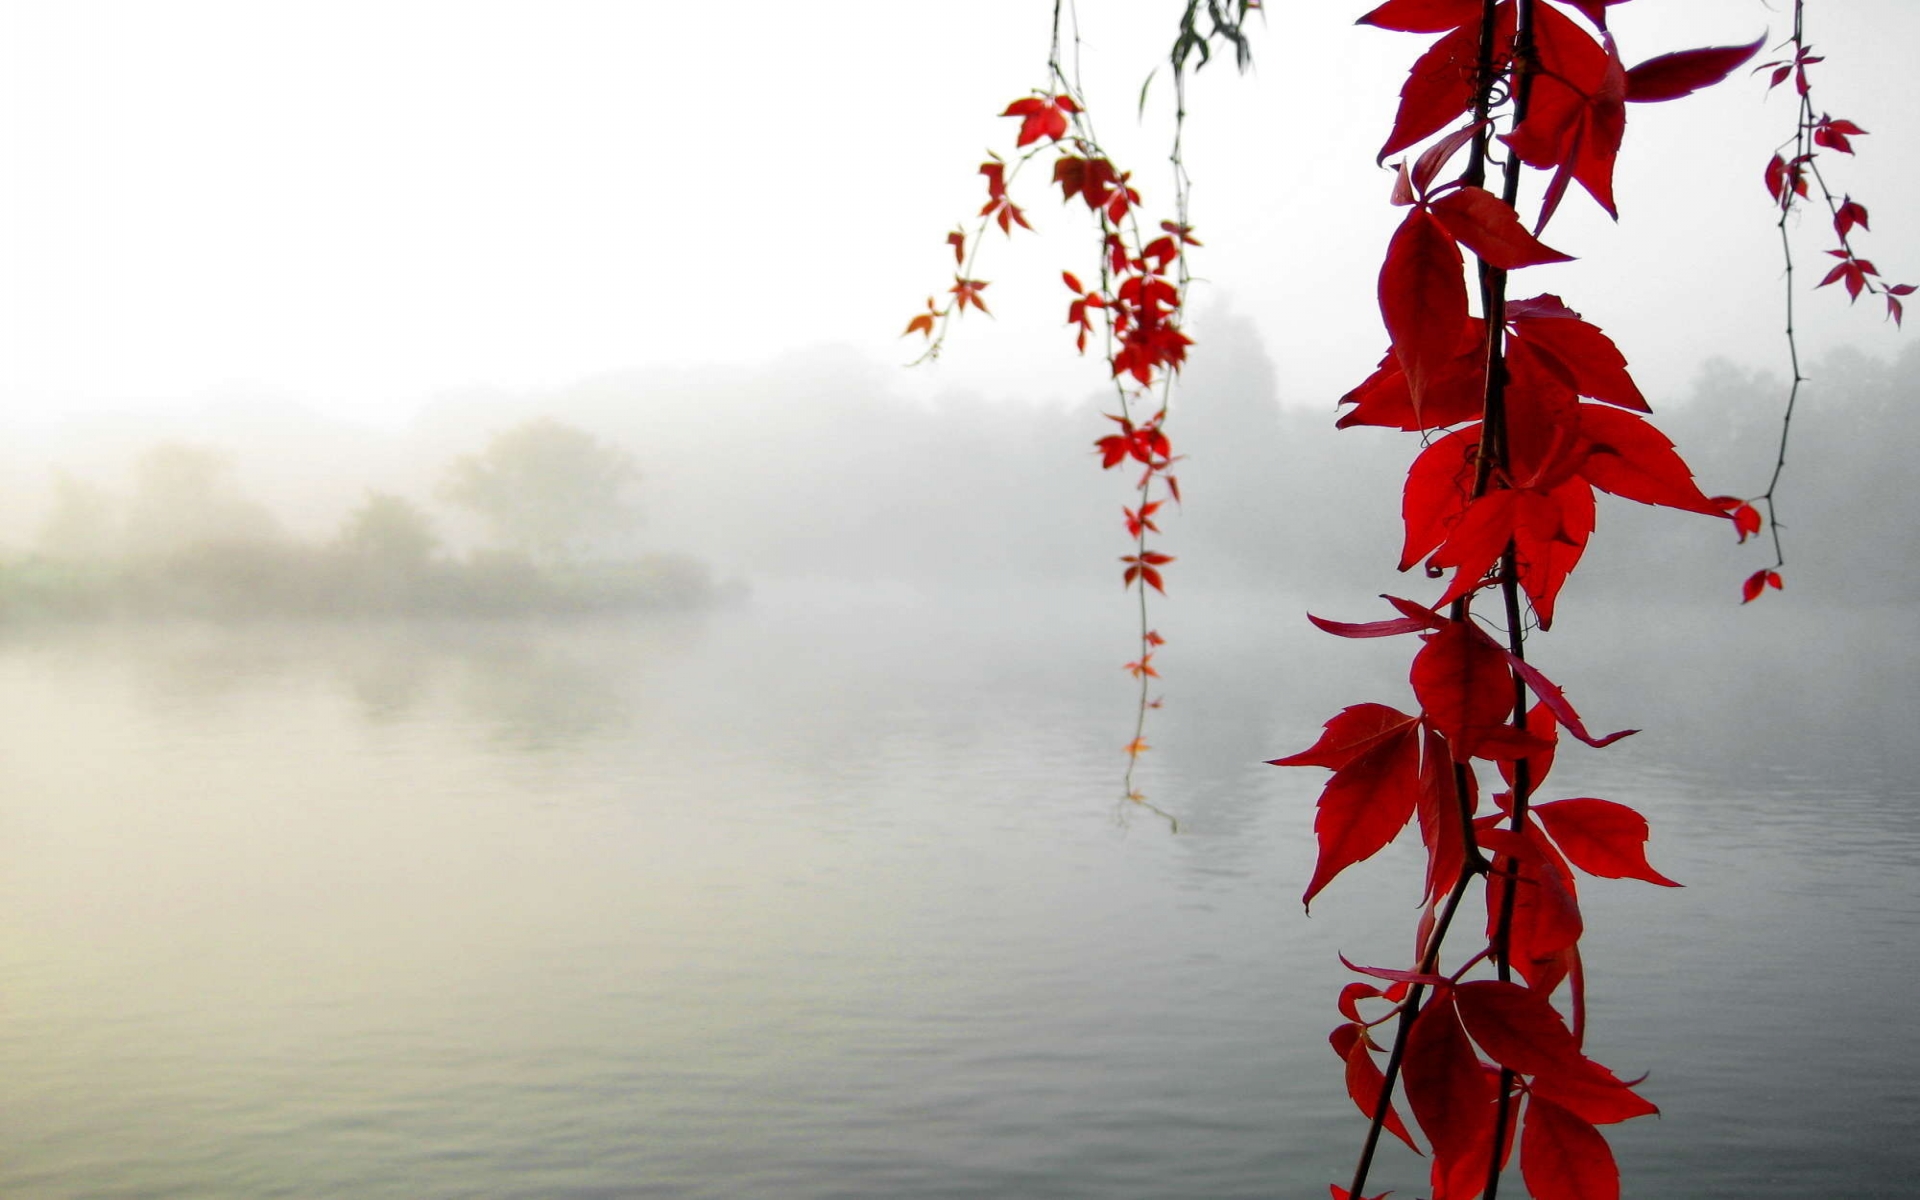 Red Vine Along a Lake in the Morning Mist on Haze Islands, 1920x1200. (Belle Deesse,18 December 2012)